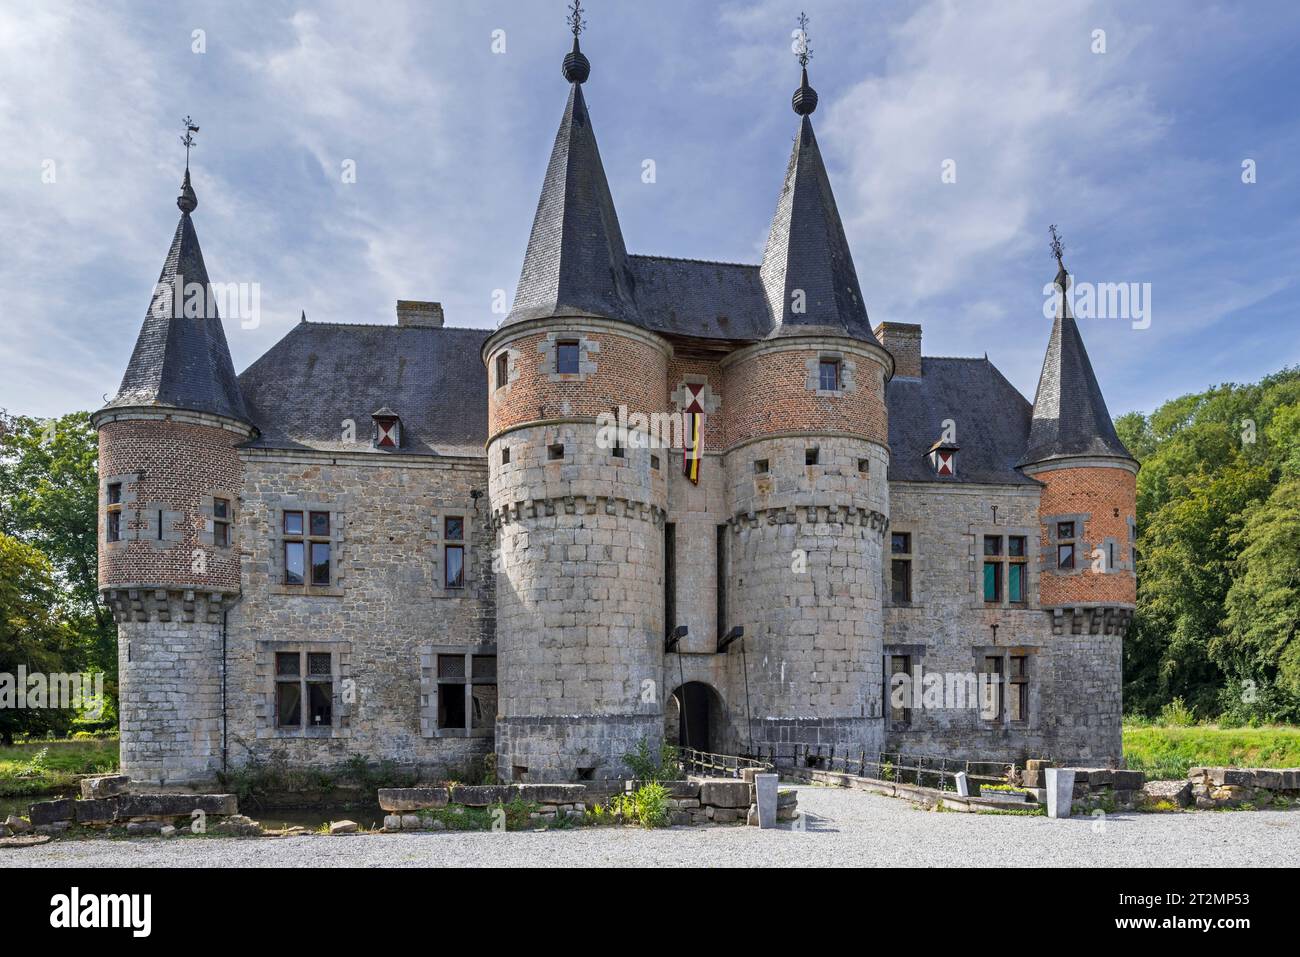 Château de Spontin, medieval 16th century moated castle near Yvoir, province of Namur, Belgian Ardennes, Wallonia, Belgium Stock Photo